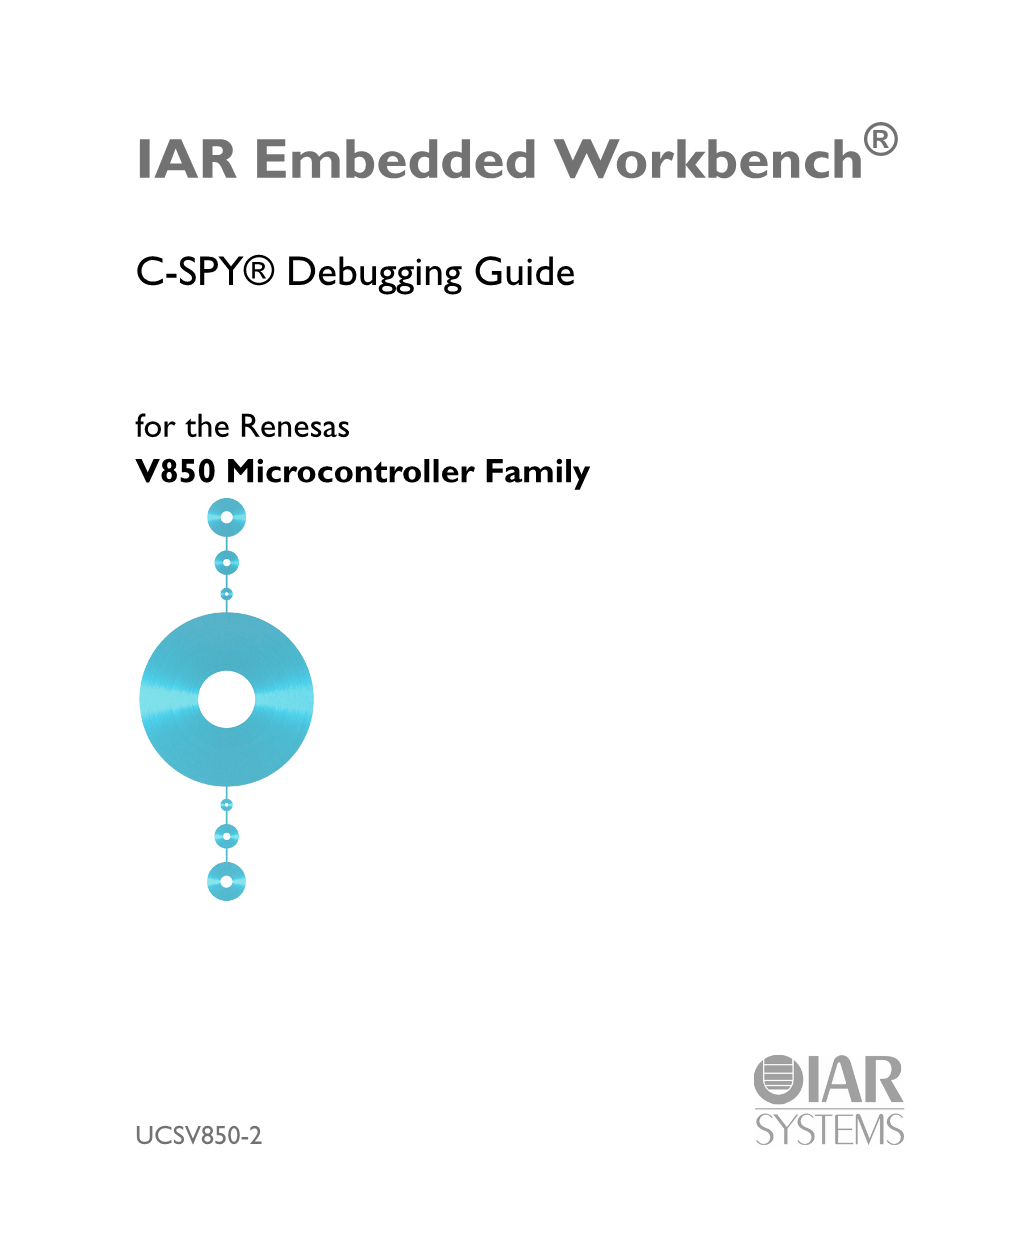 IAR Embedded Workbench C-SPY Debugging Guide for V850